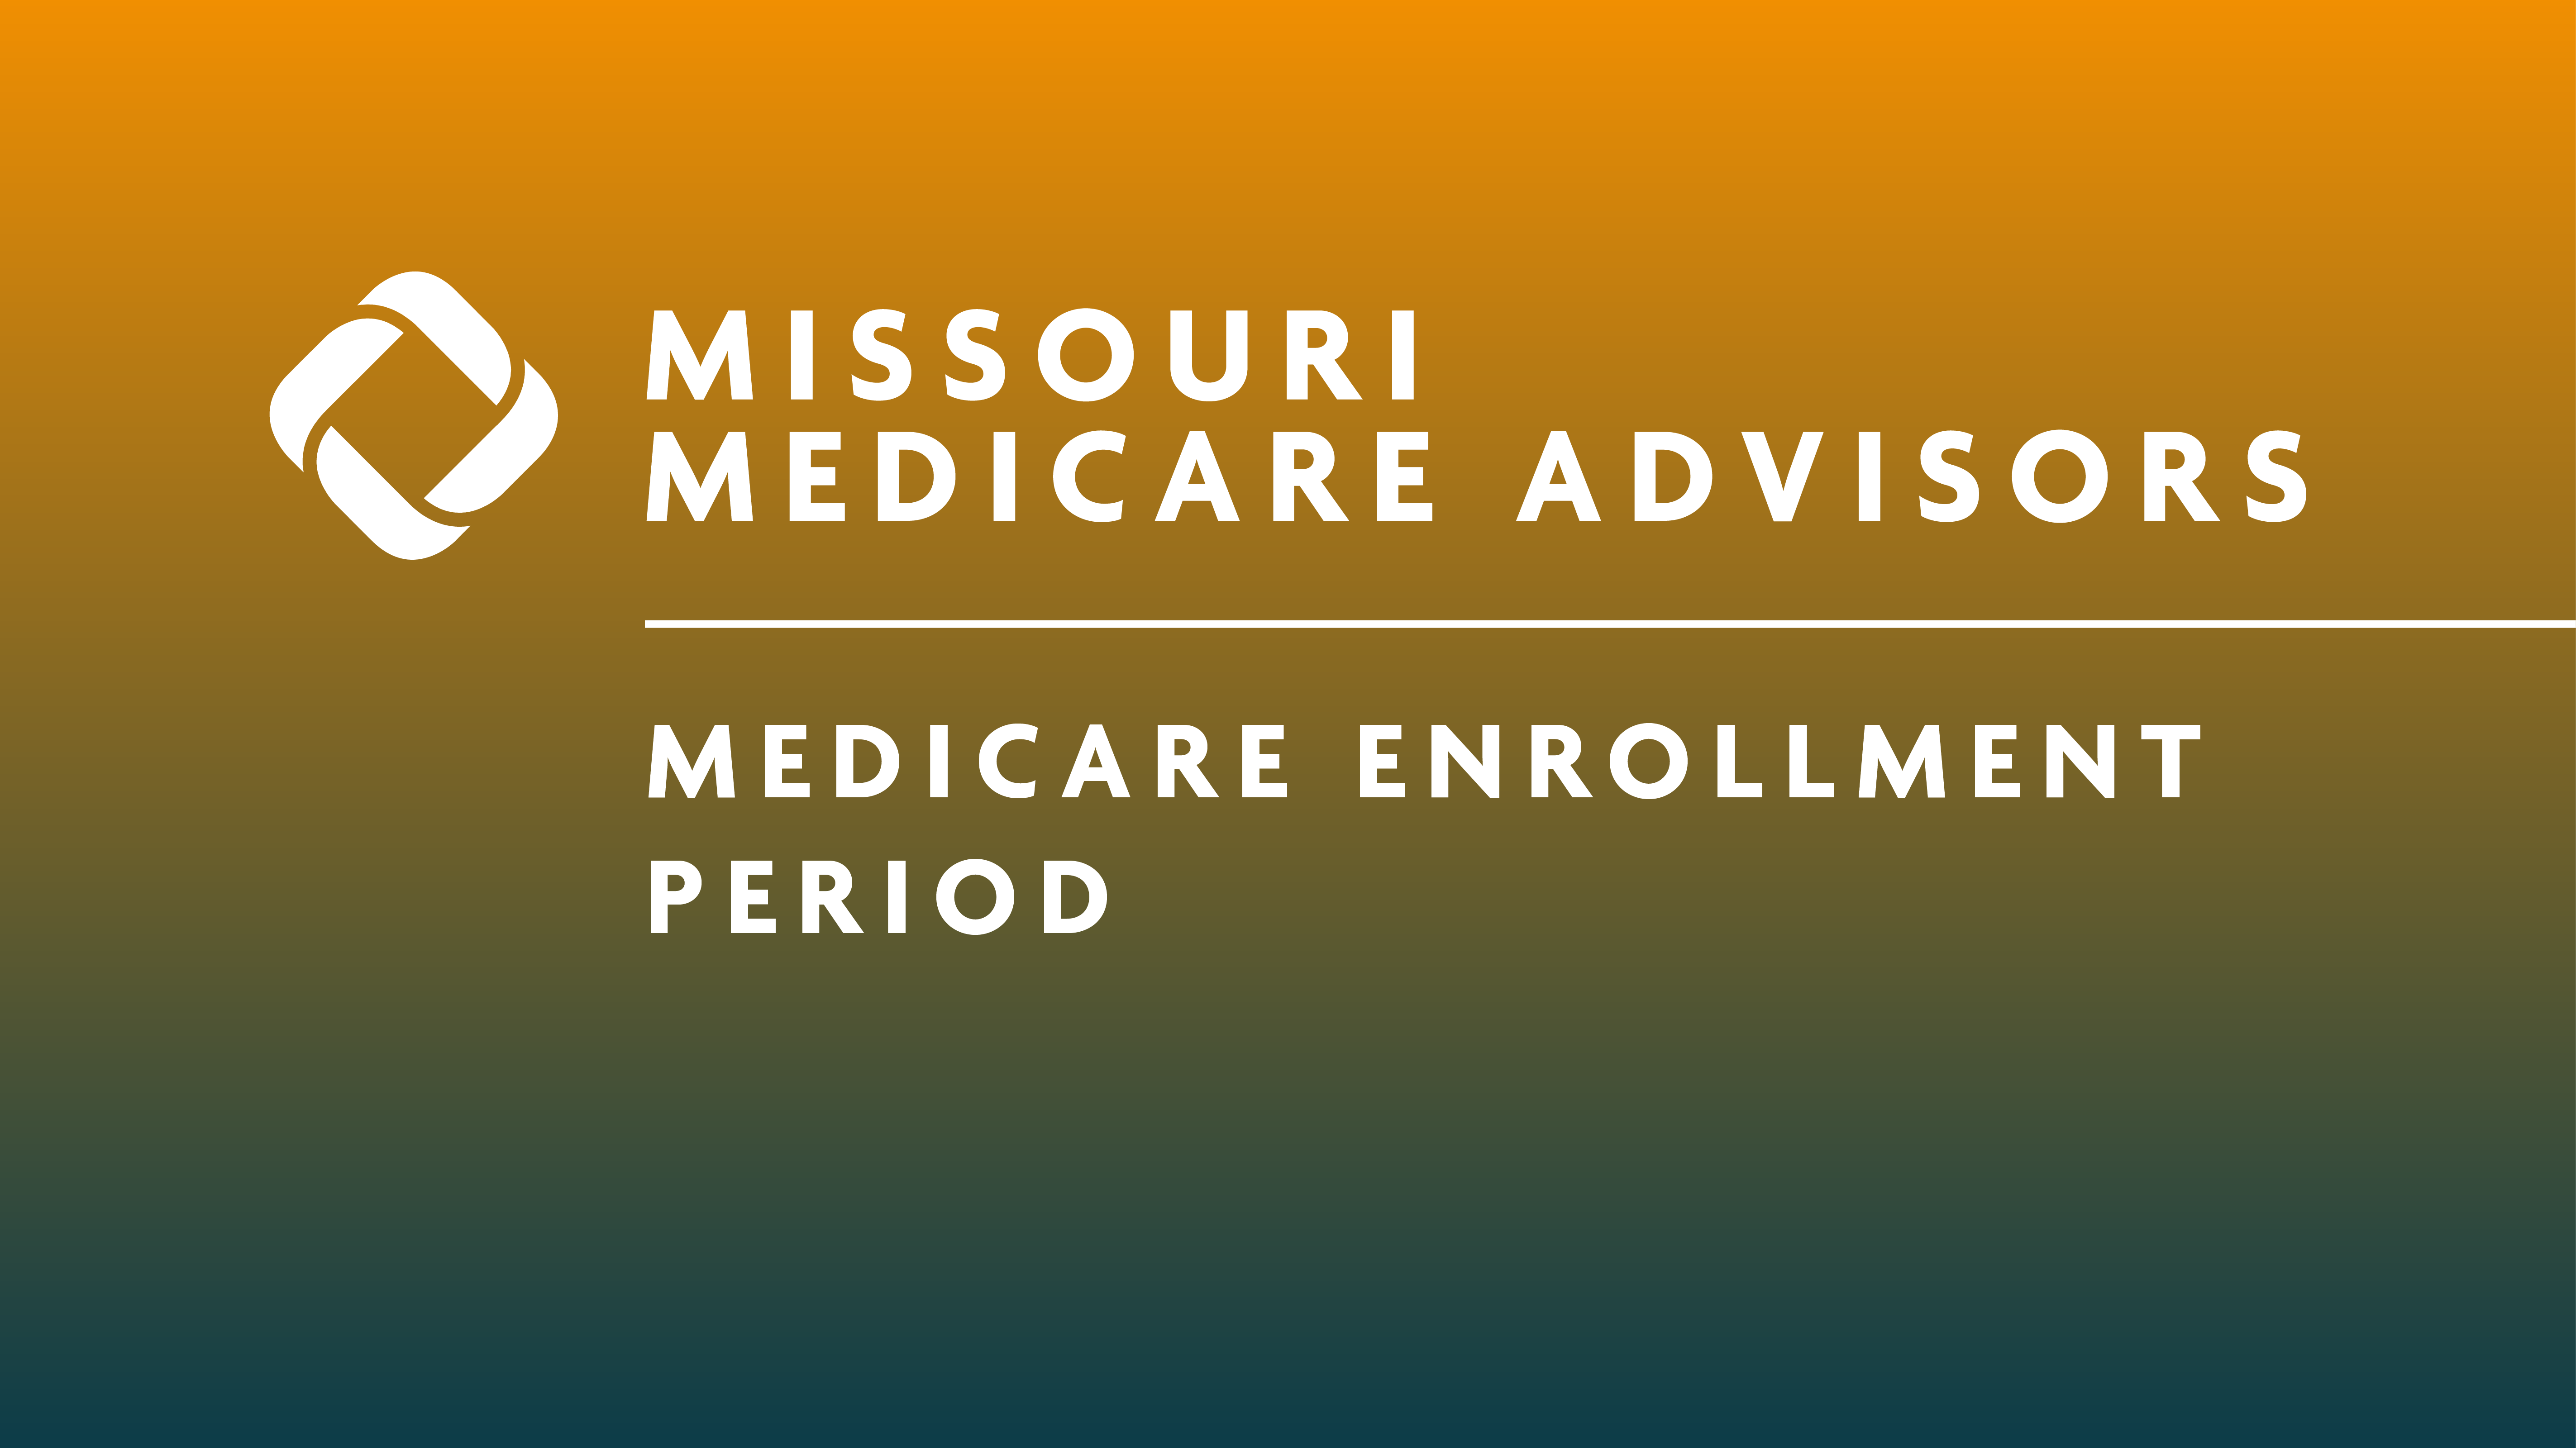 Missouri Insurance Advisors discuss Medicare enrollment periods